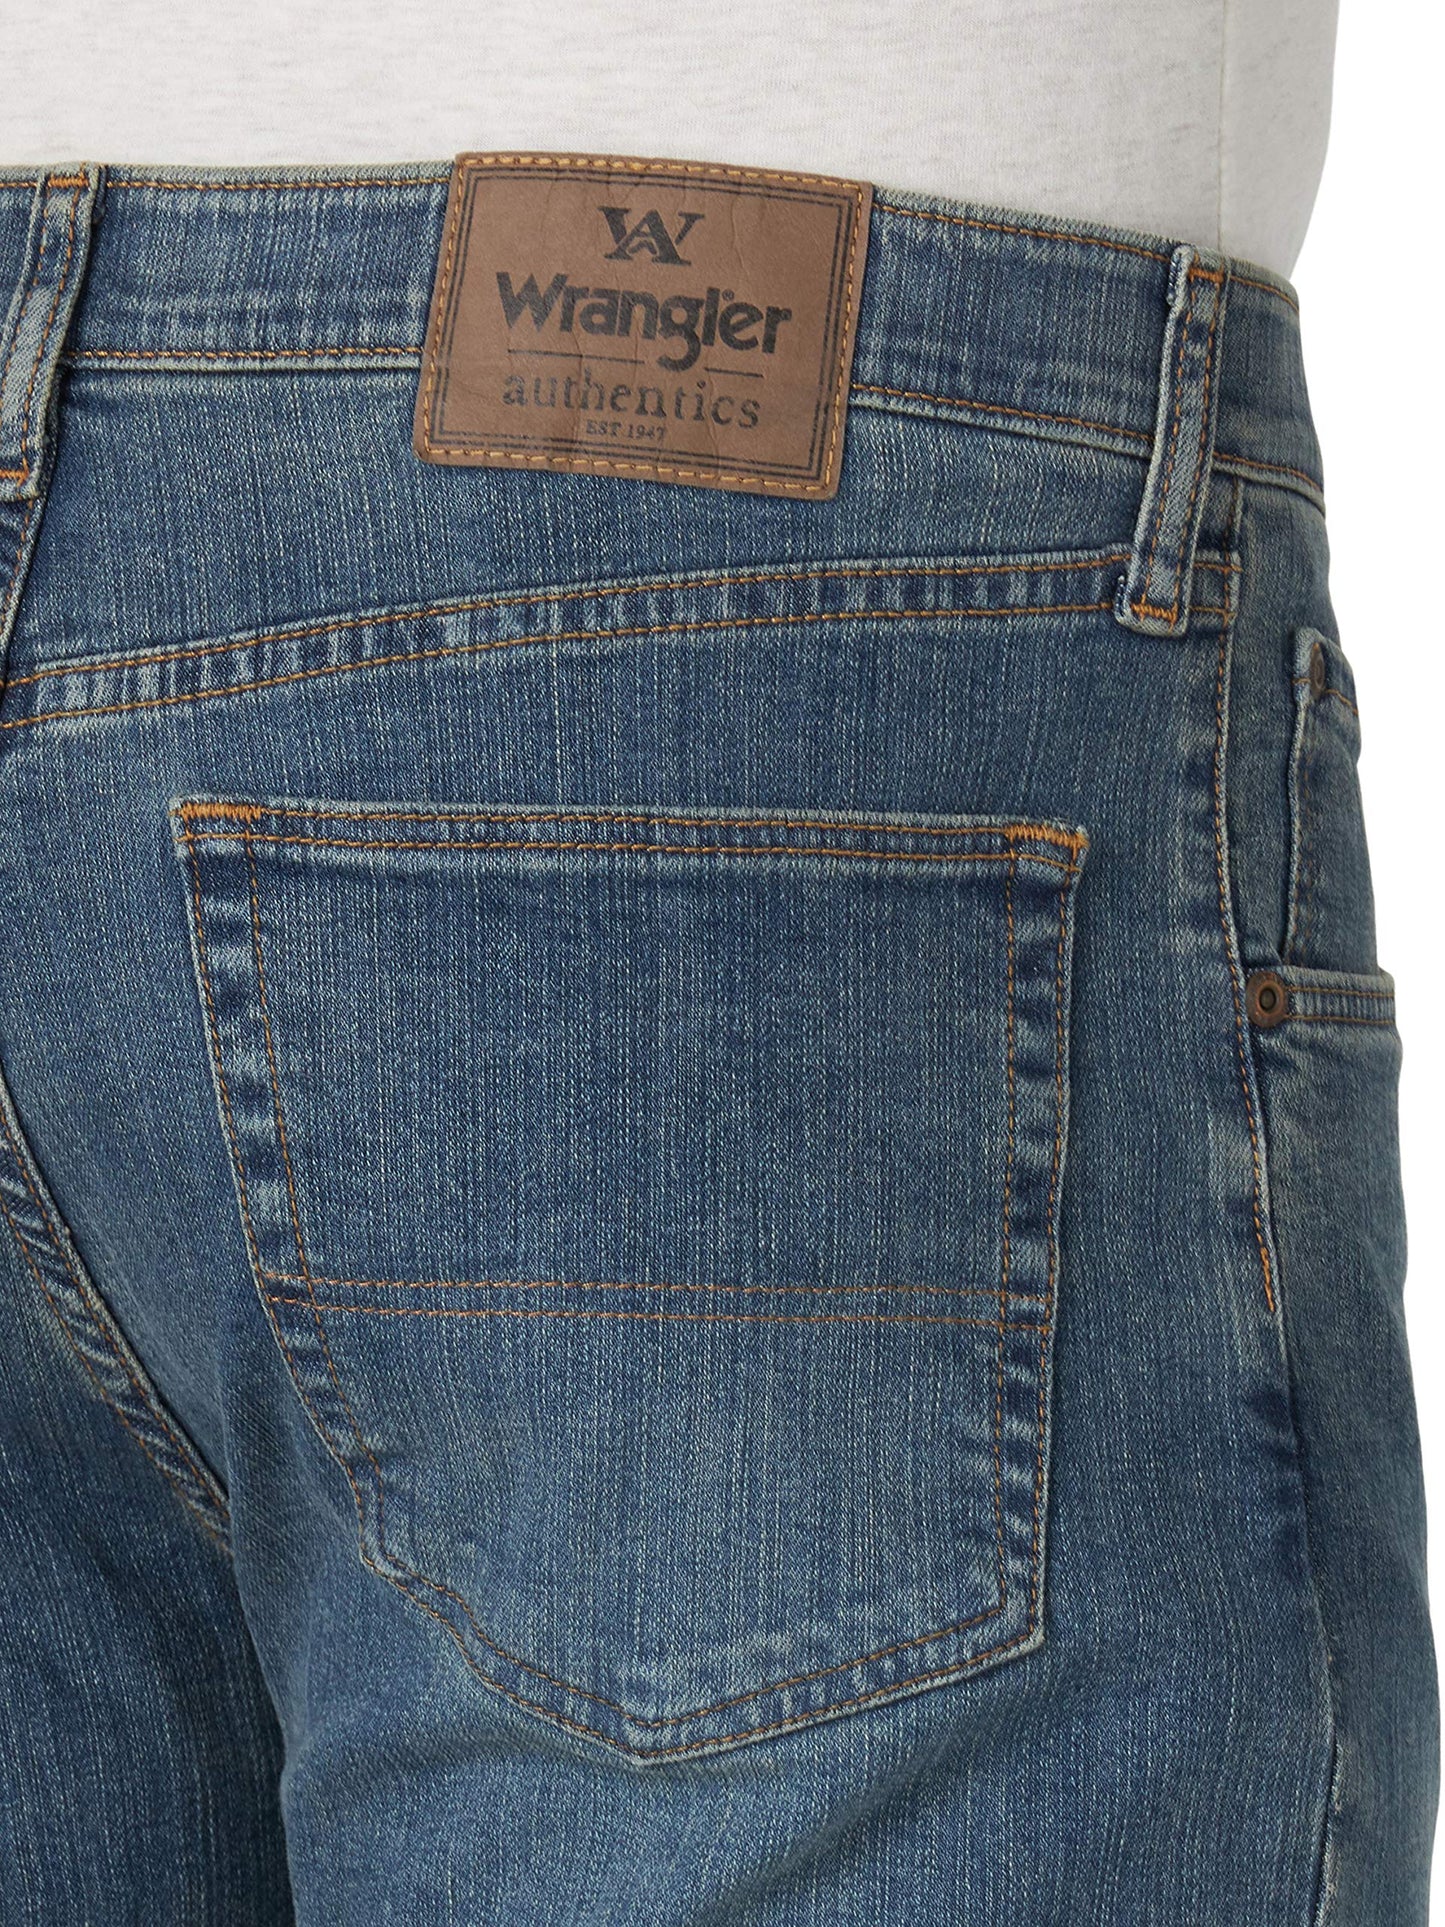 Wrangler Authentics Men's Regular Fit Comfort Flex Waist Jean, Slate, 38W x 30L